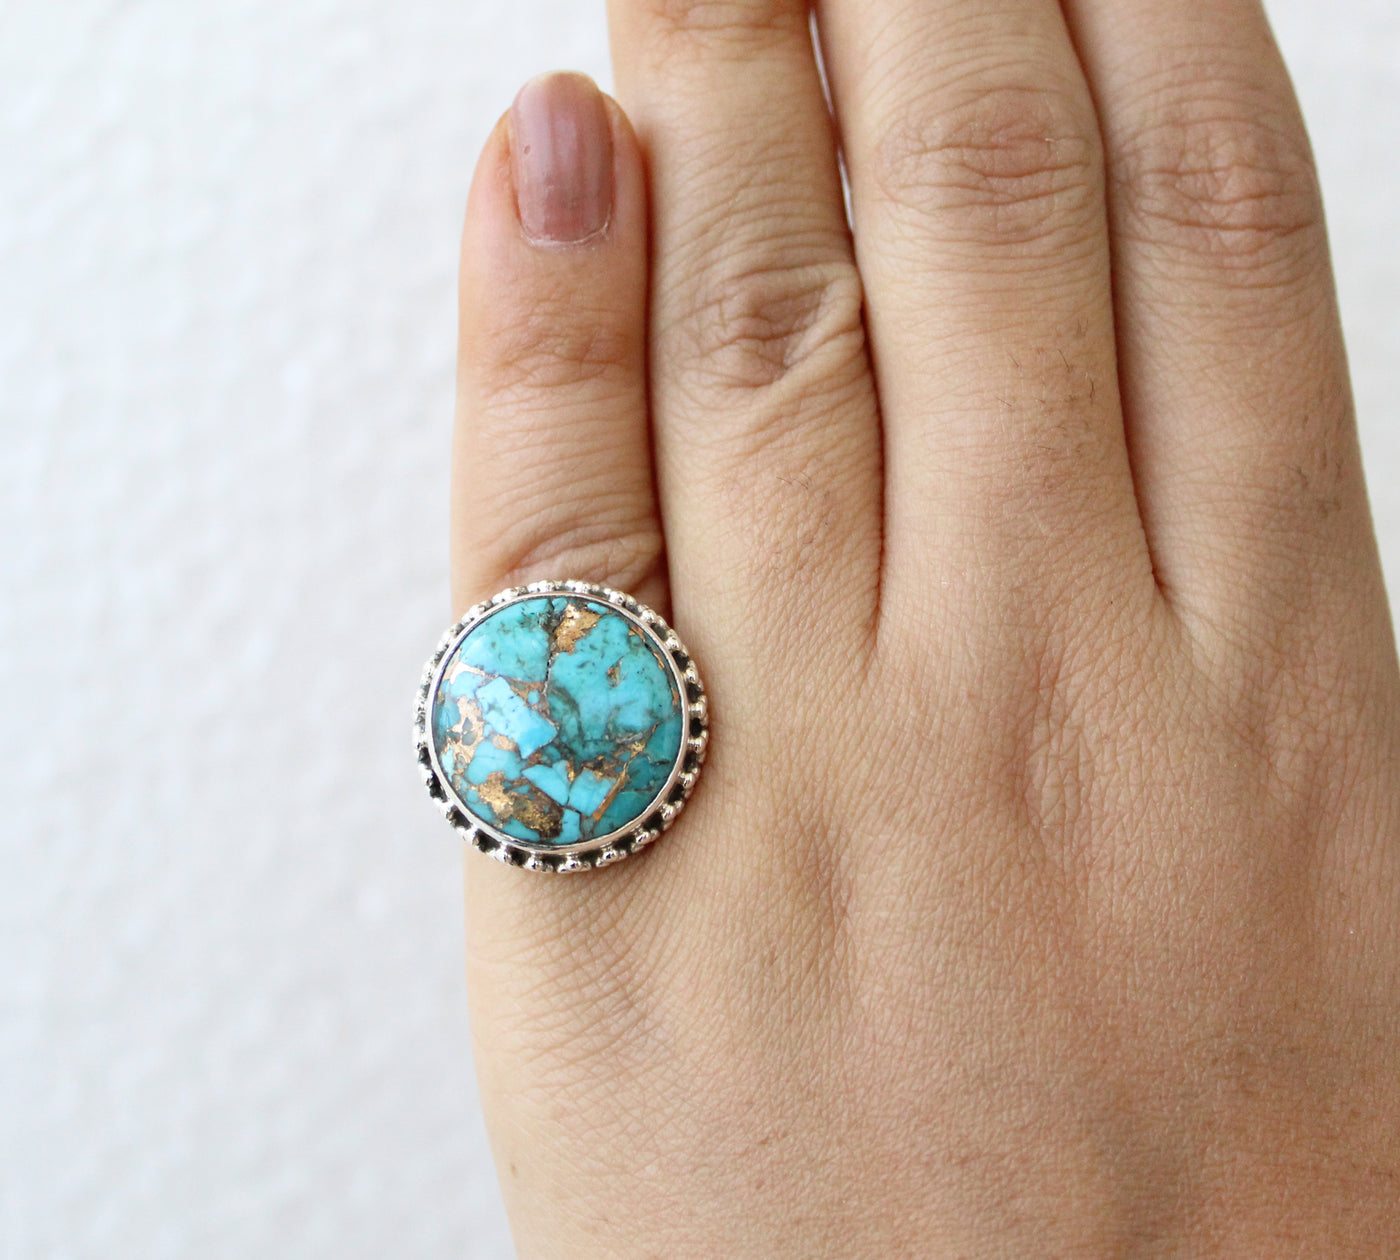 Copper Turquoise Ring, Boho Organic Ring, Blue Stone Ring, Turquoise Ring, Gemstone Ring, Copper Turquoise Ring, Natural, Organic Ring